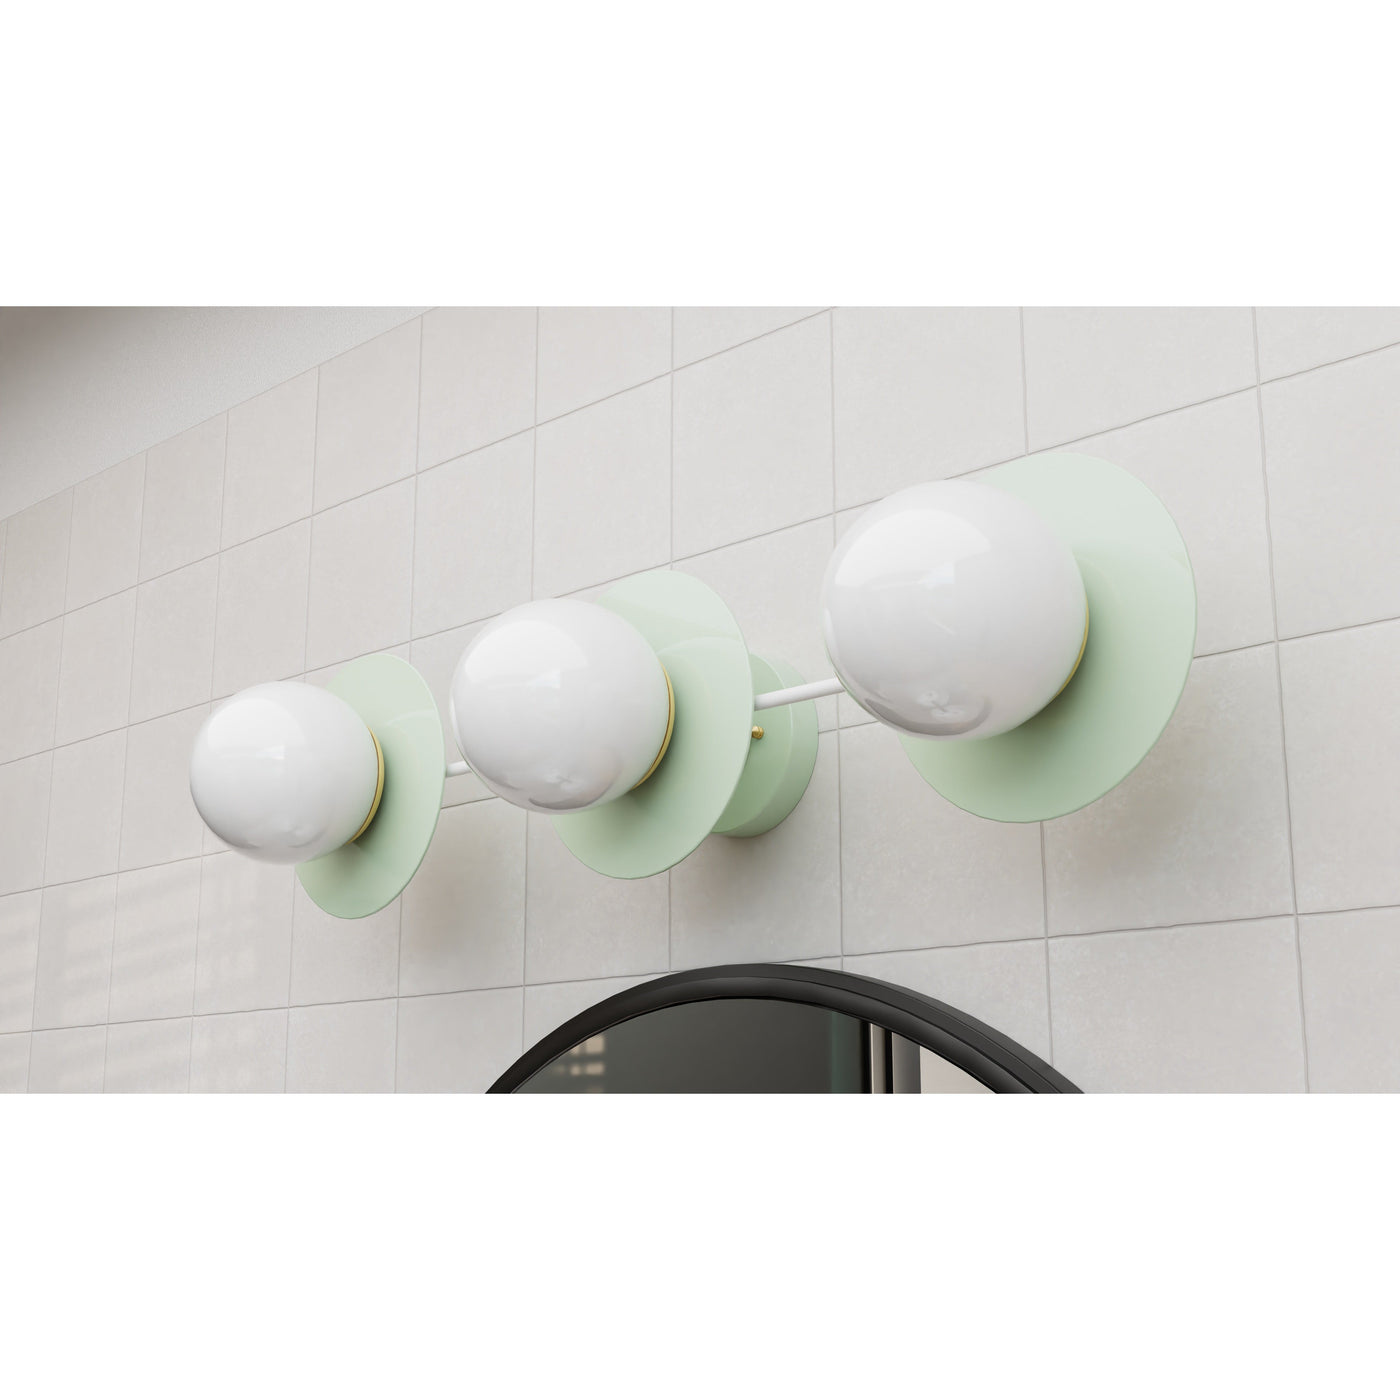 Aberdeen - Three Light Bathroom Vanity